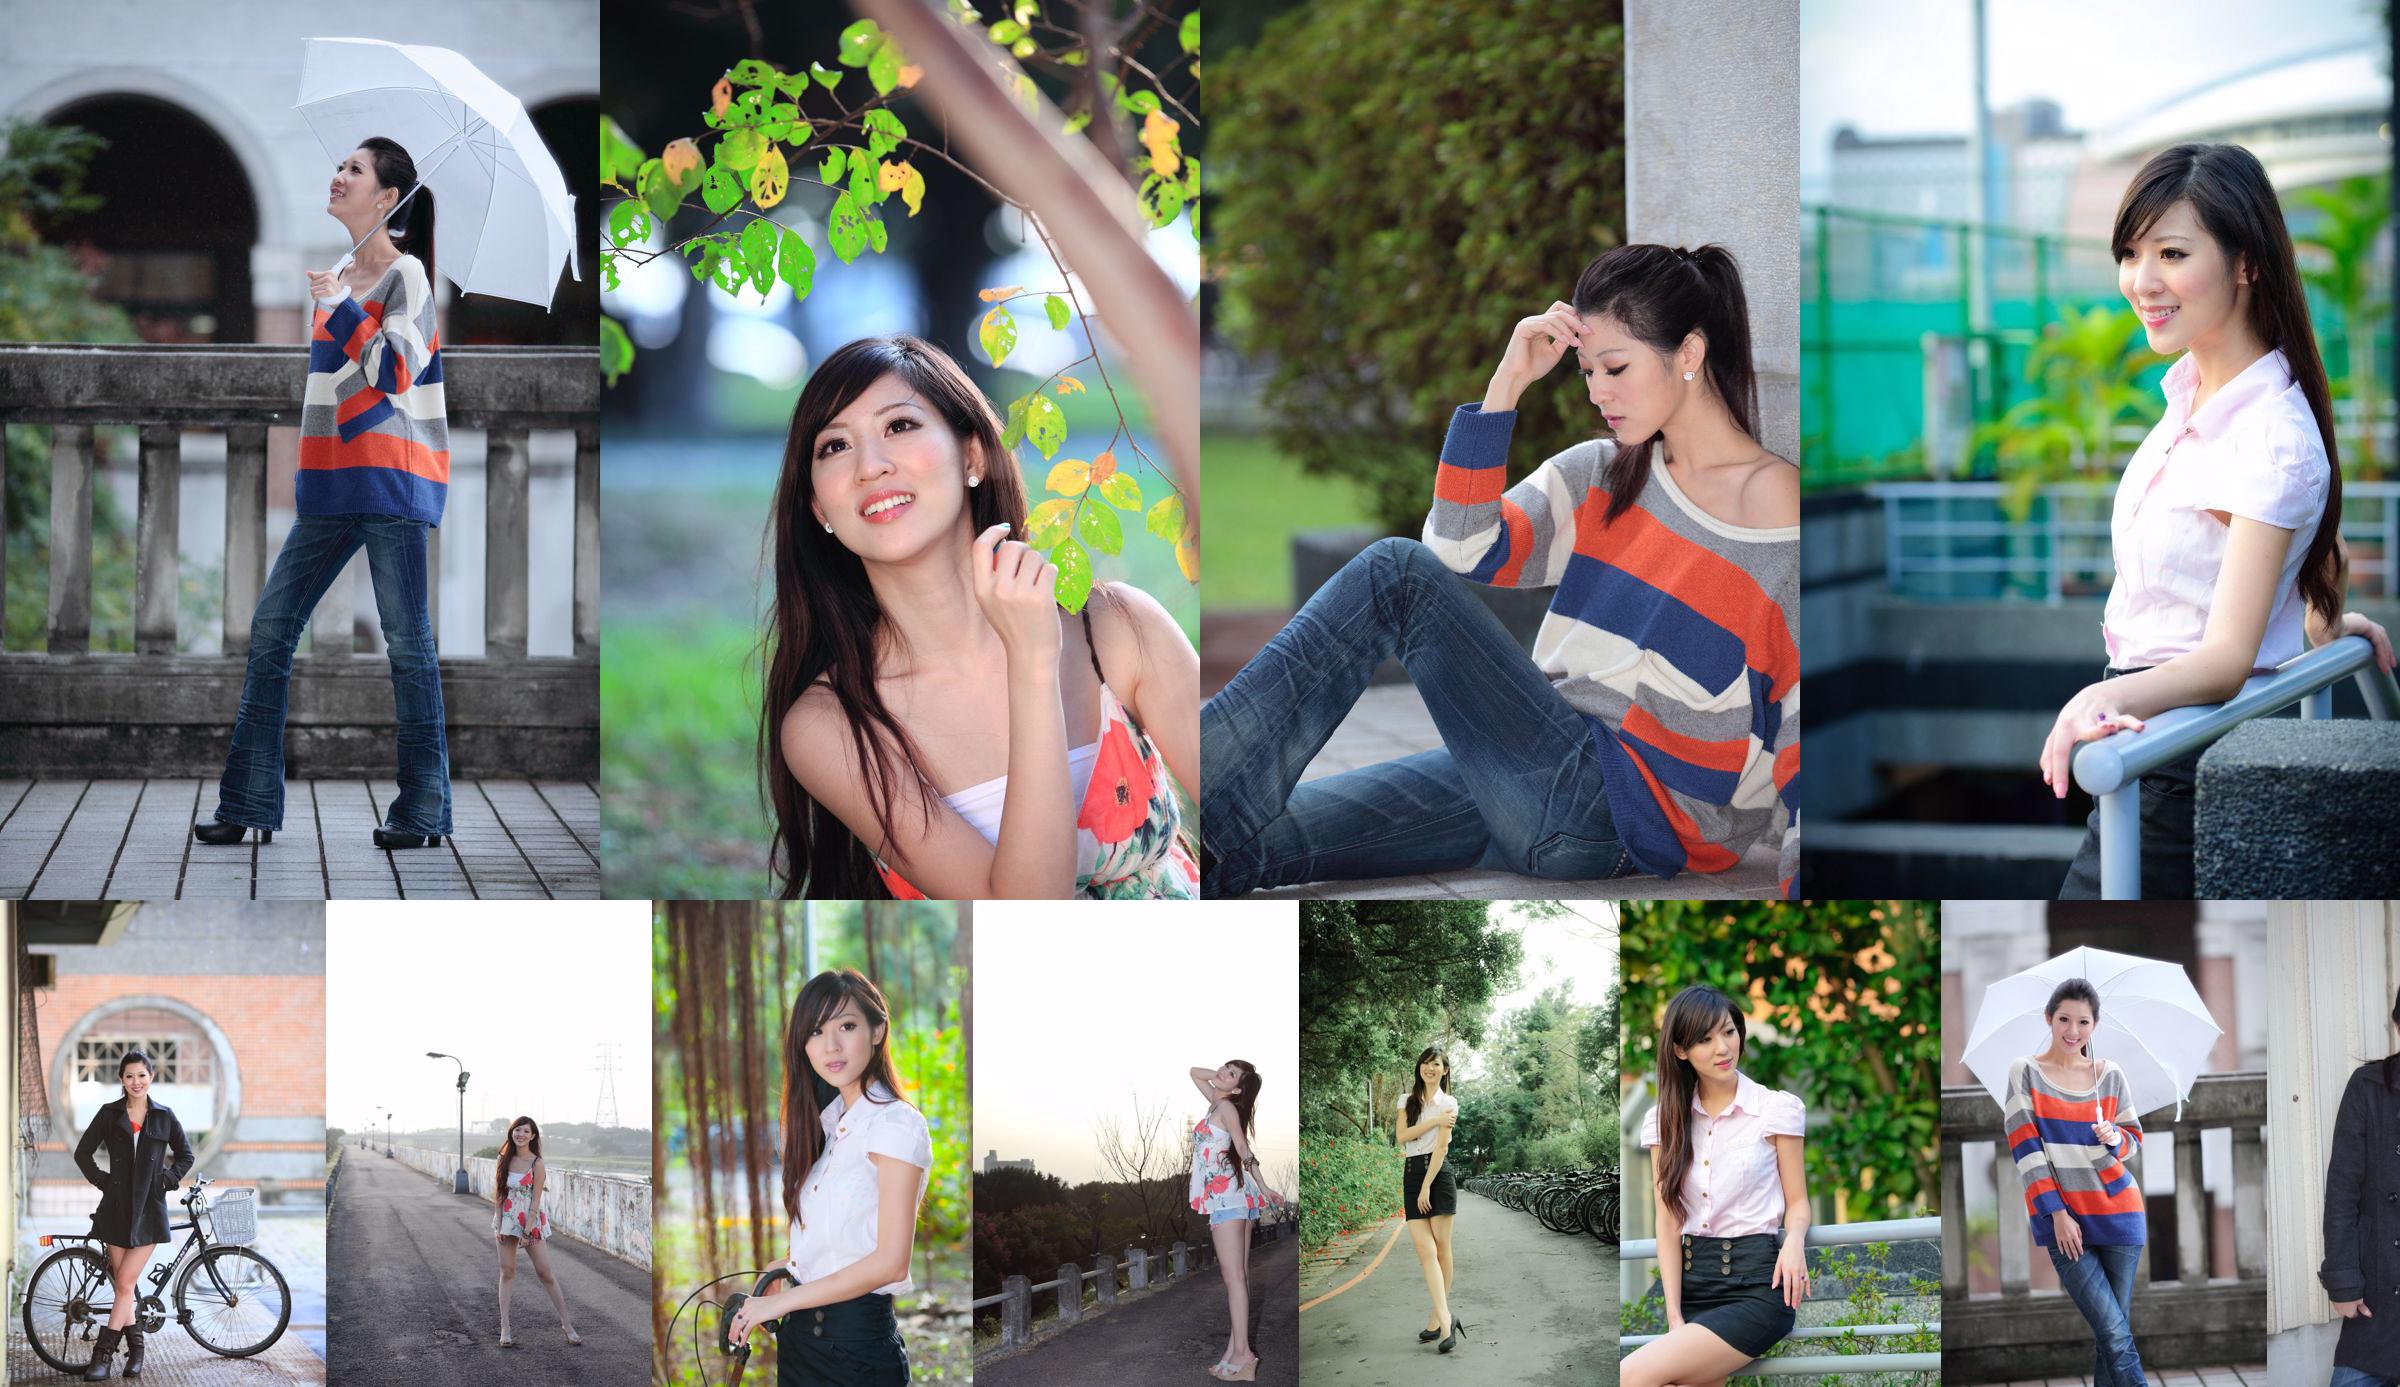 Han Yujie Gennie/Wei Wei/Chen Weirong "Small Fresh and Beautiful Outside Shooting" No.0a4e5d Page 1